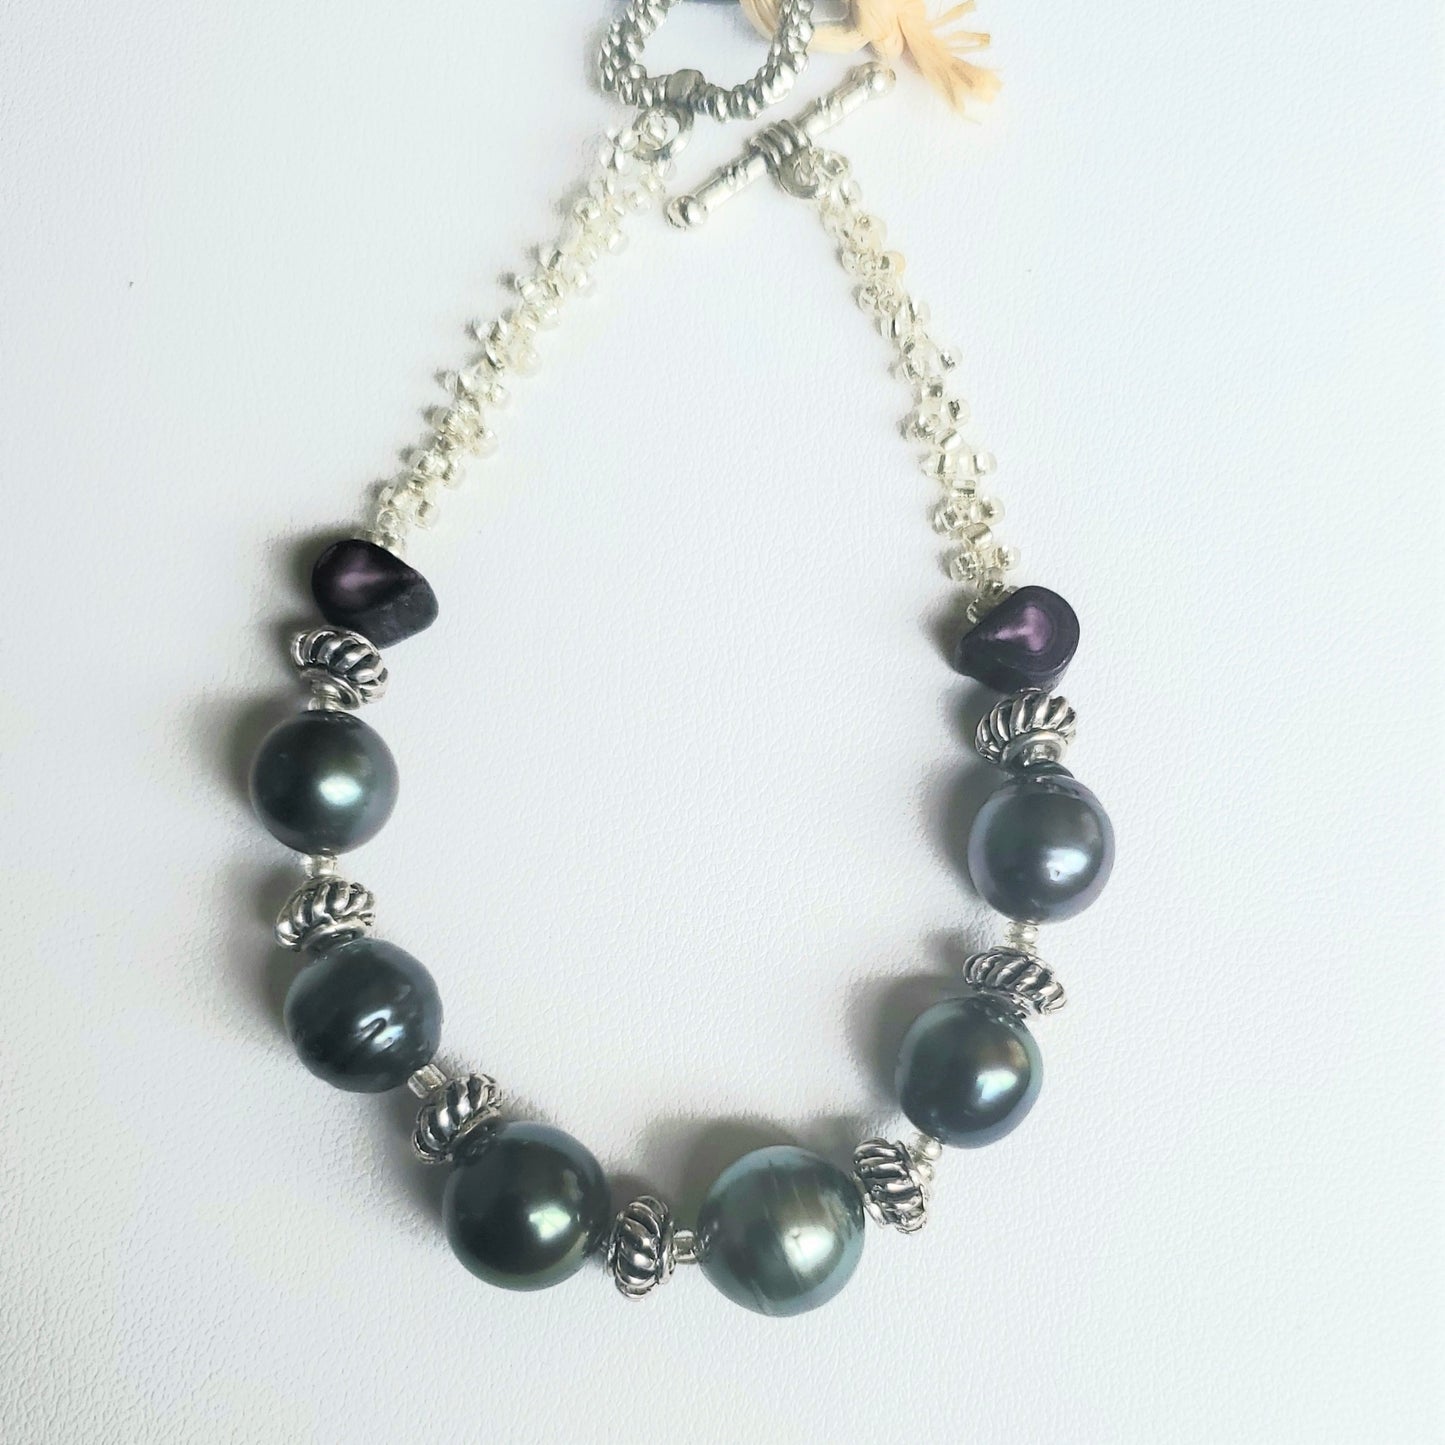 Handmade Tahitian Black Pearl & Pitkern Sea Urchin Bracelet